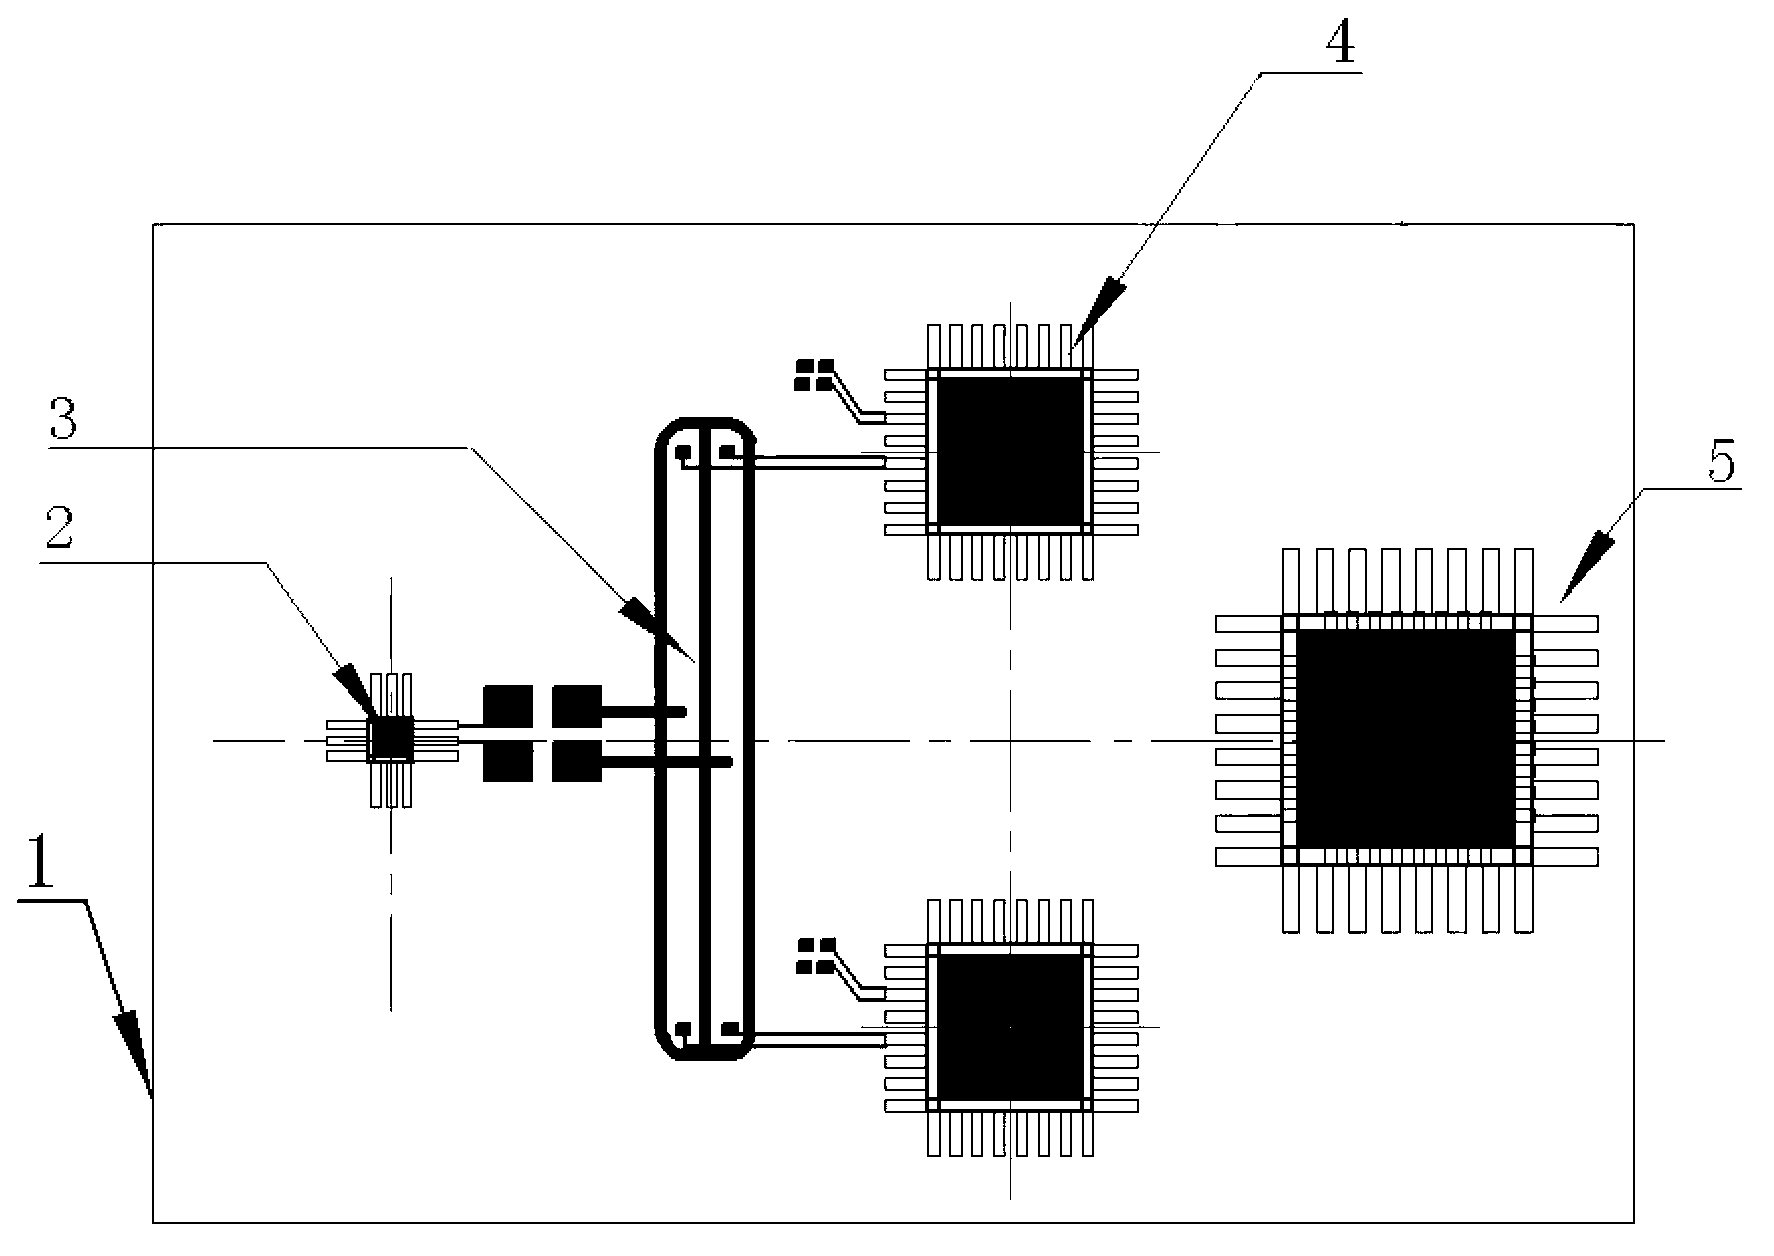 Large dynamic medium-high frequency analog signal digitization conversion circuit